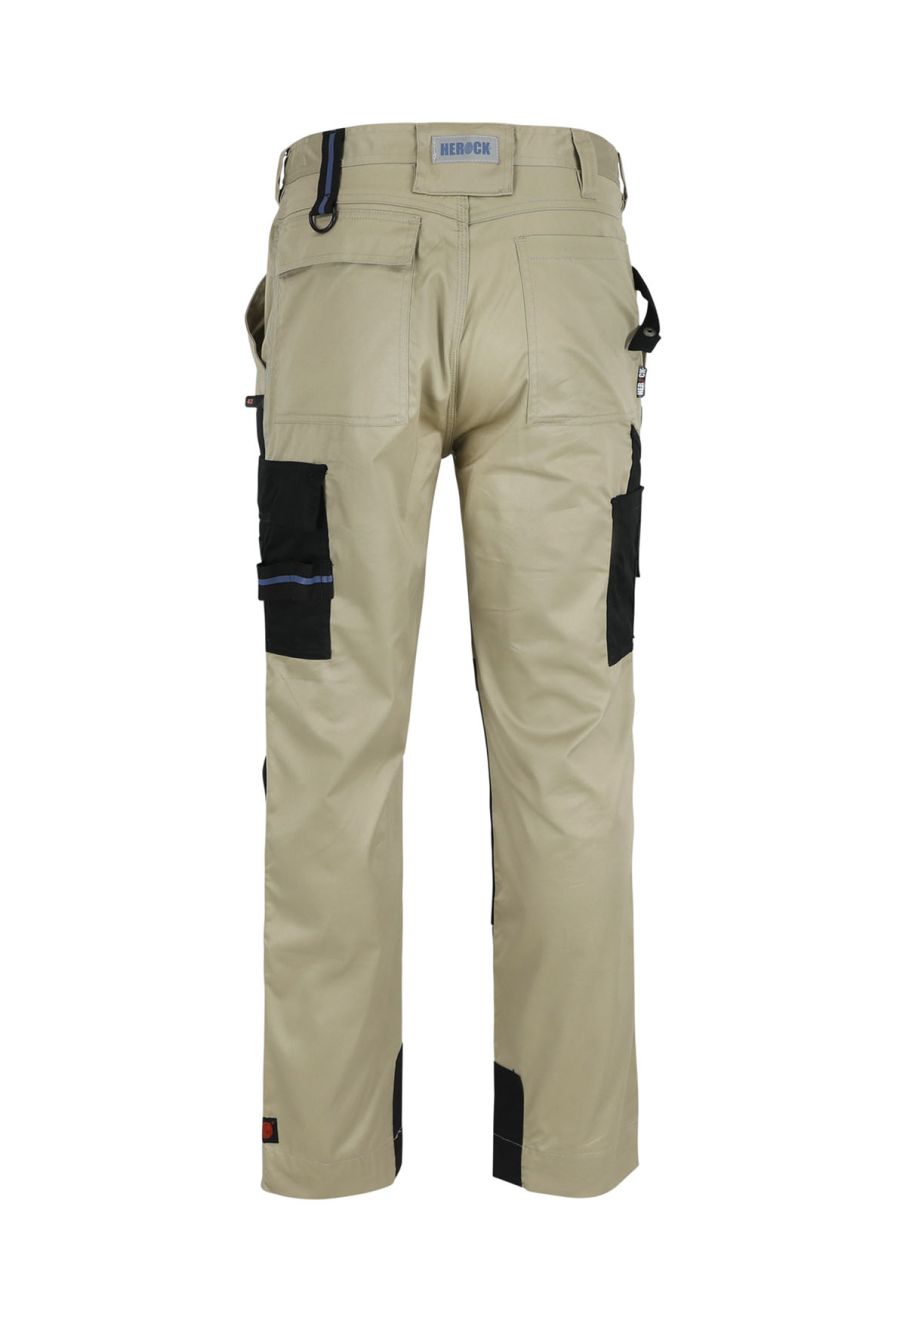 White-Blue CLASSIC WORK TROUSERS Decorators Style H-Duty Pants Knee Pad  Pocket | eBay